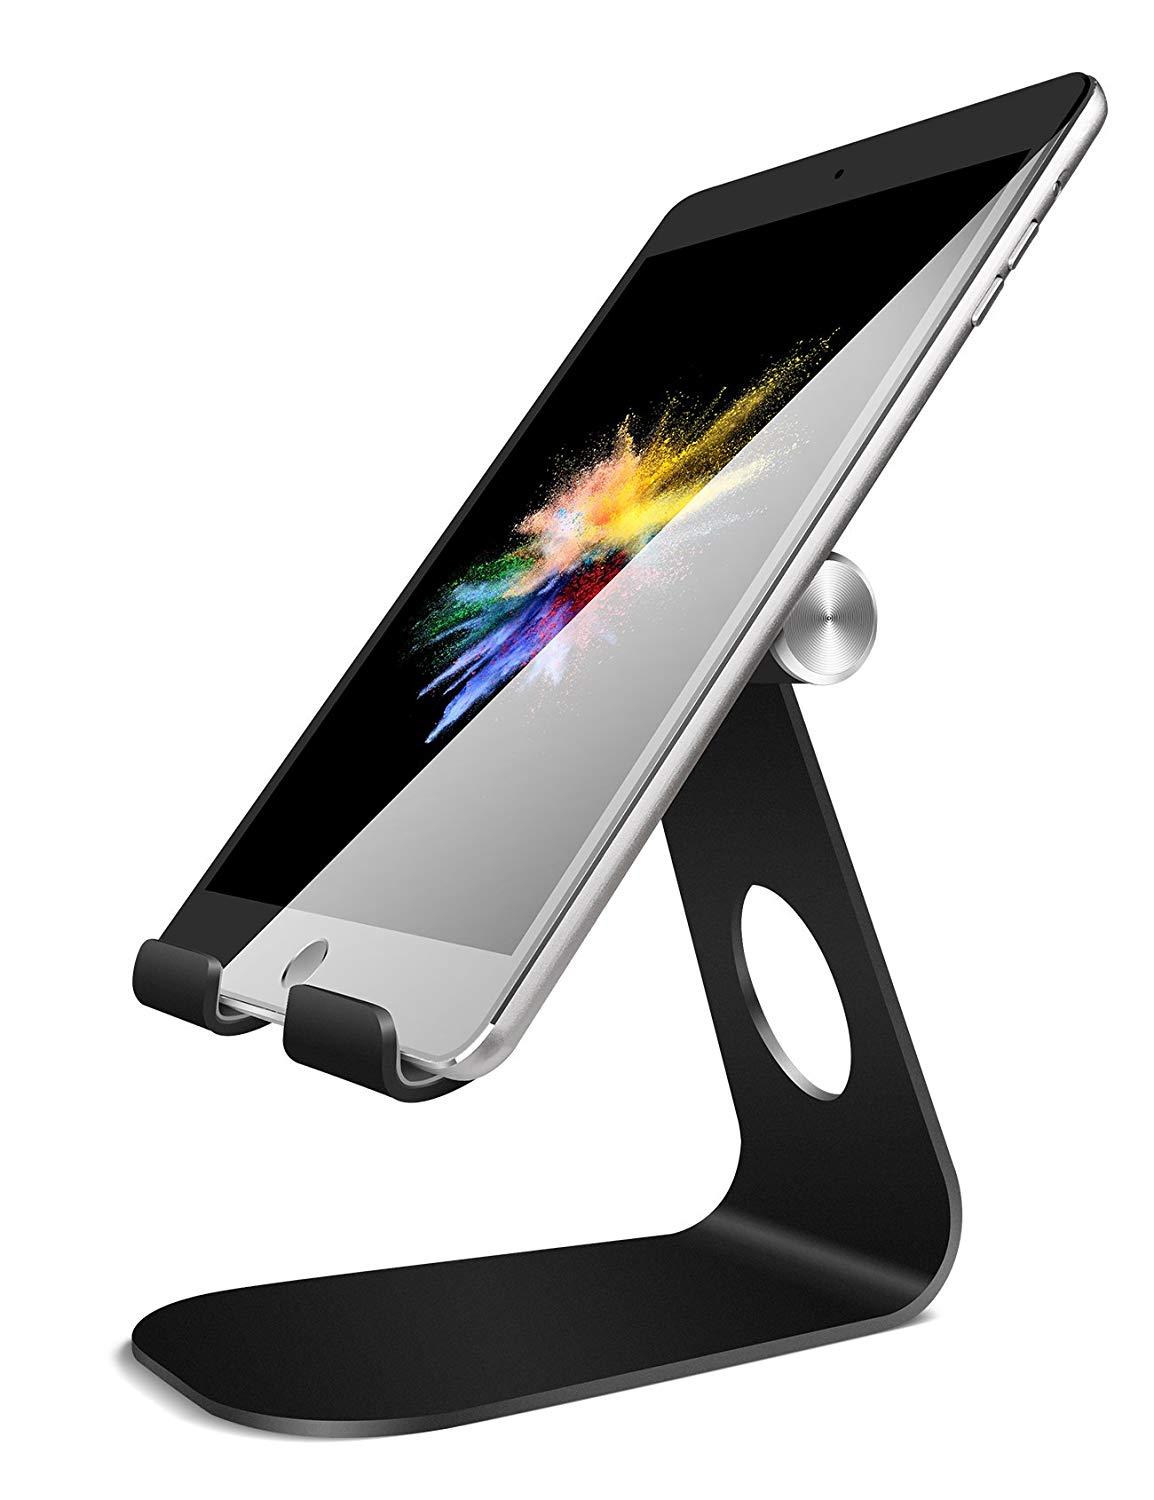 Tablet Stand Adjustable,Aluminum Desktop Stand Holder Dock Compatible 4-13 Inch Tablet For Ipad 9.7,10.5,12.9,Kindle,Nexus